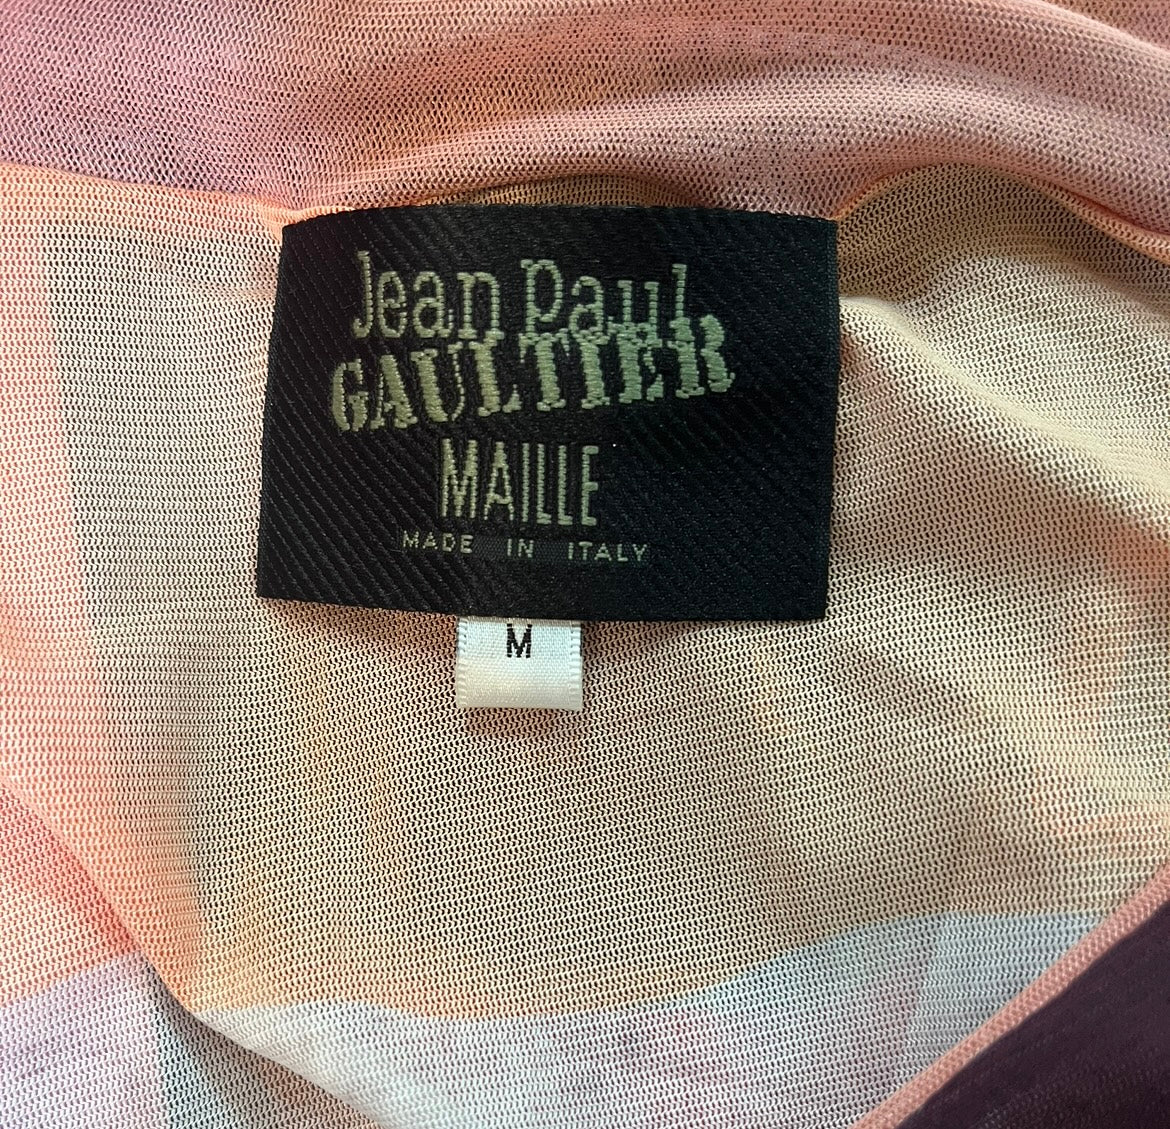 Jean Paul Gaultier Maille 1999 Venus de Milo Print Fuzzi Mesh Maxi Dress LABEL 6 of 6